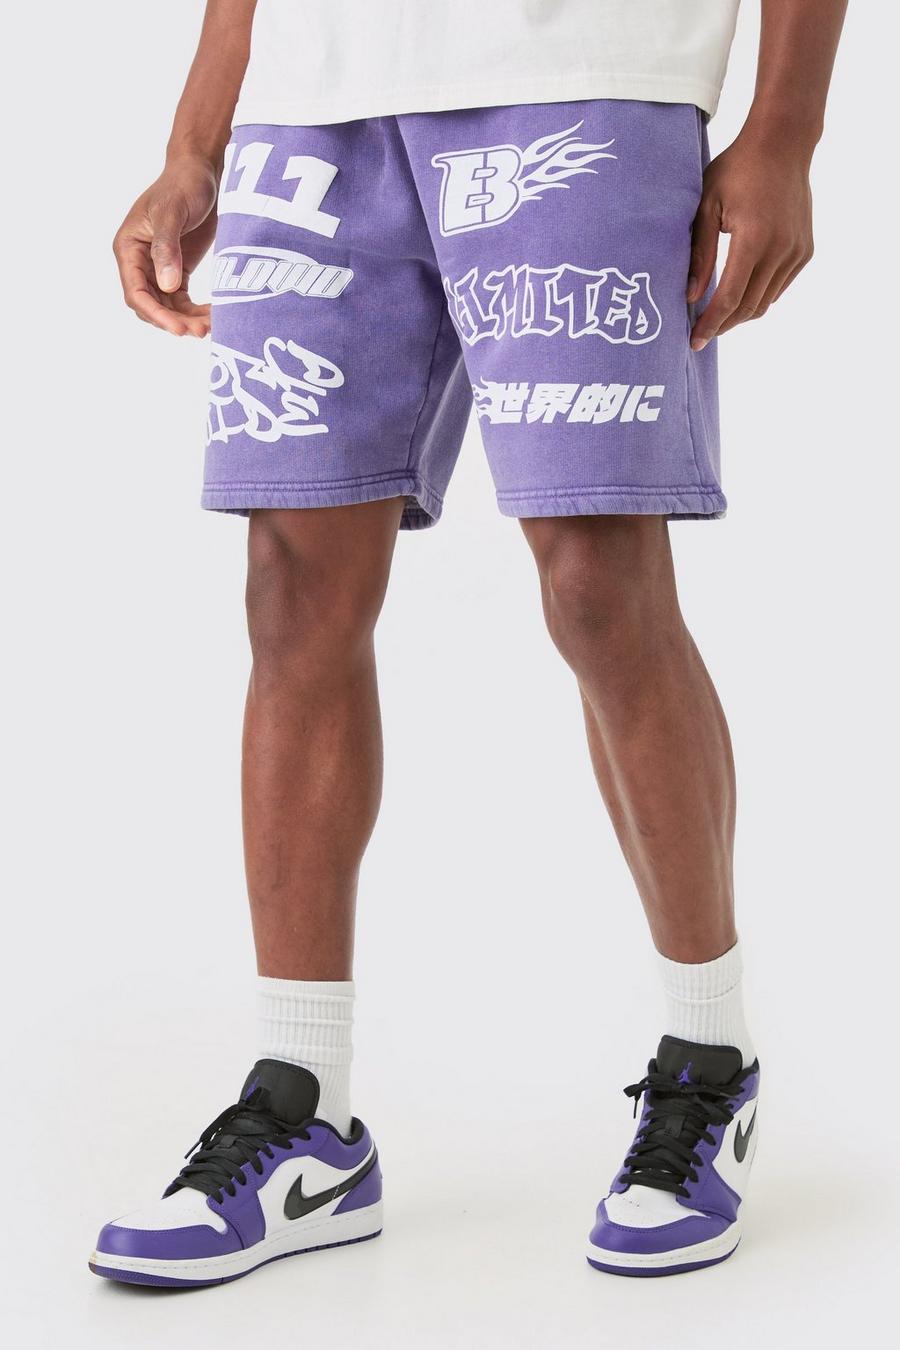 Lockere Shorts mit Print, Purple